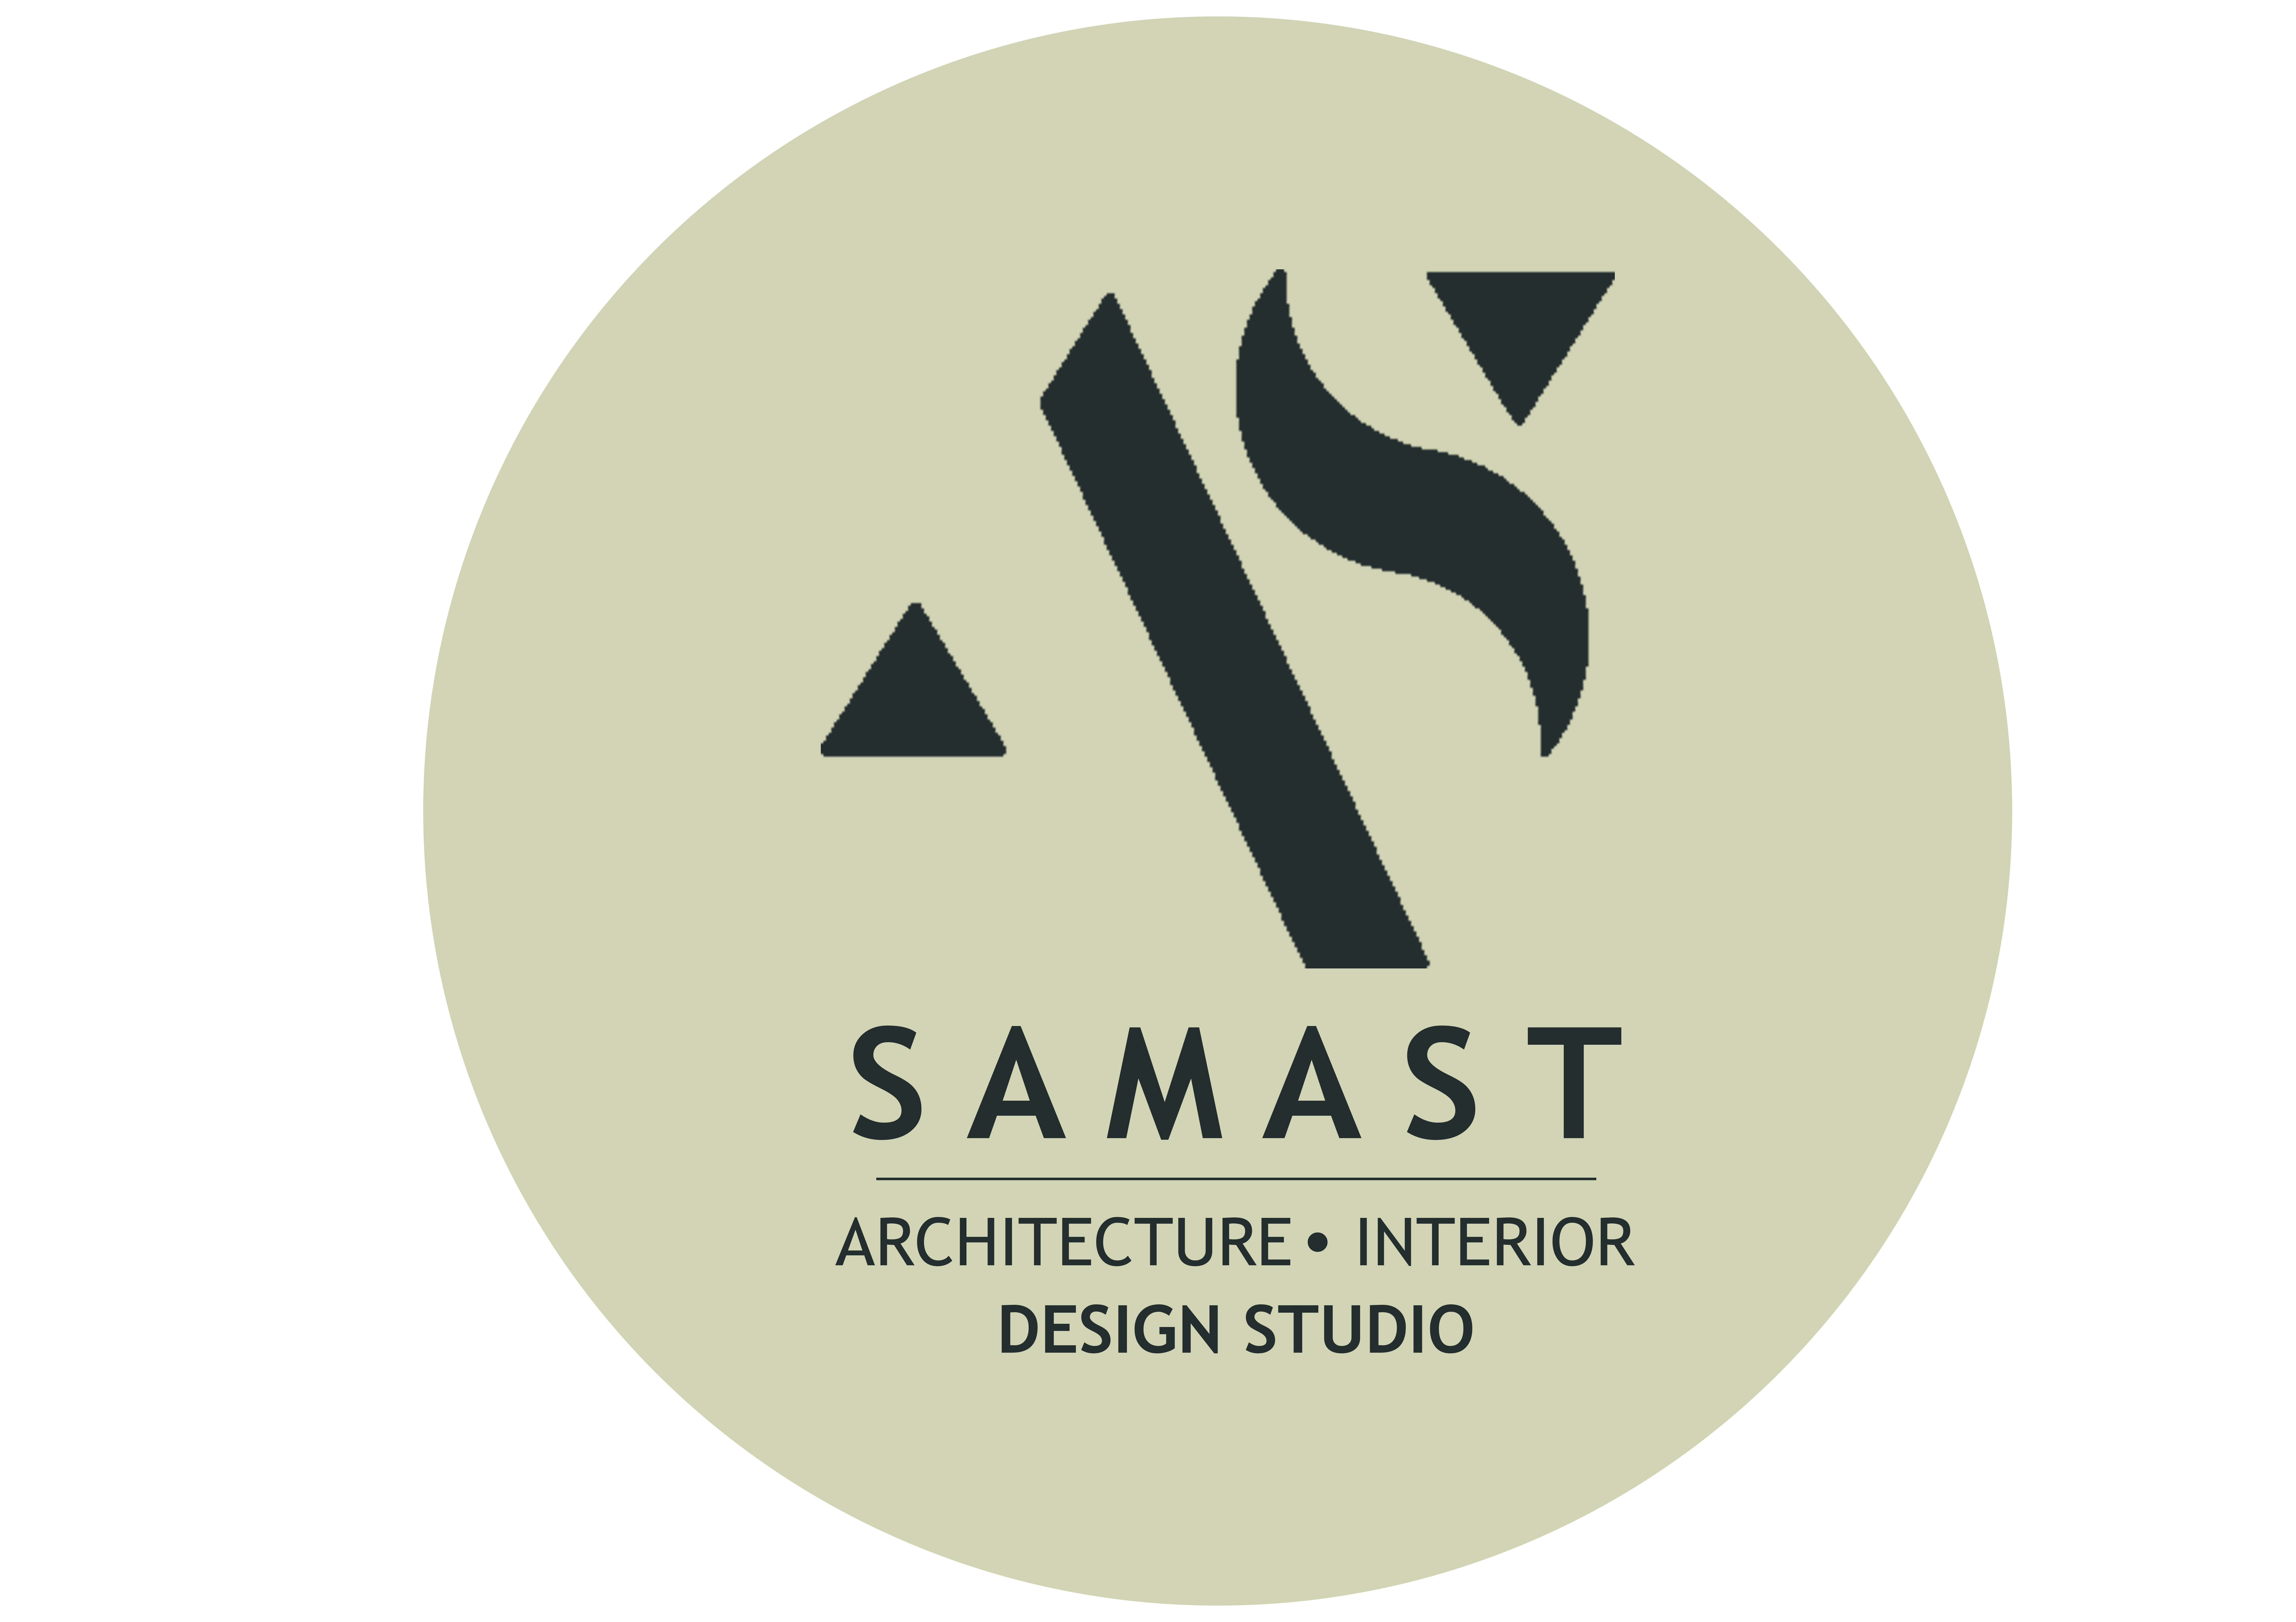 Samast Design Studio|Architect|Professional Services